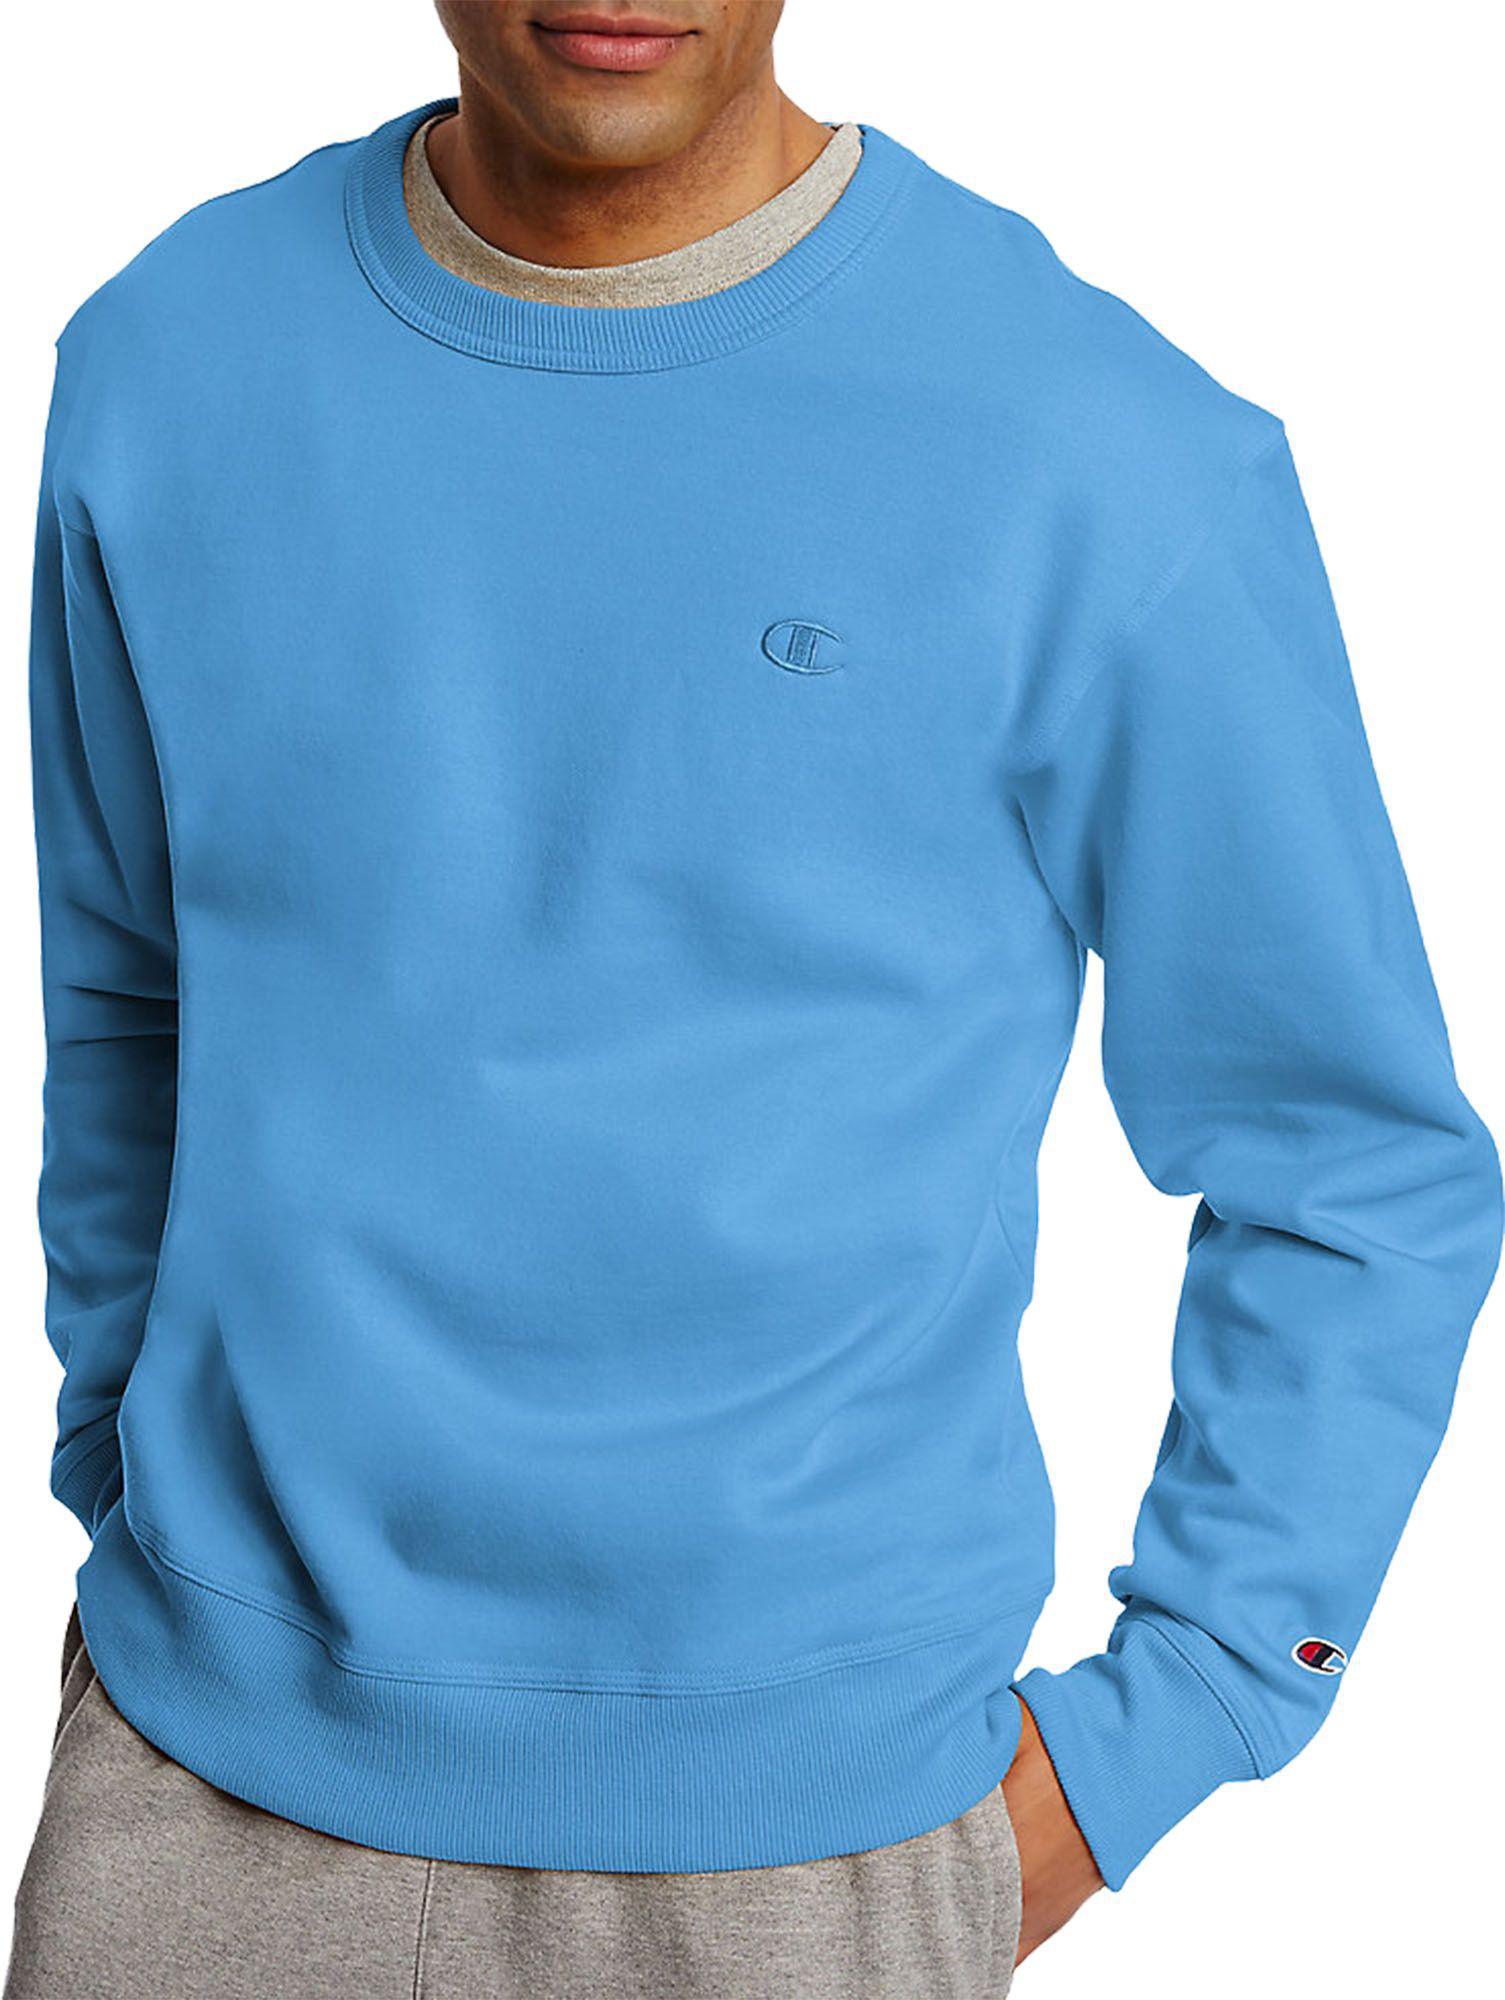 swiss blue champion sweatshirt off 52 